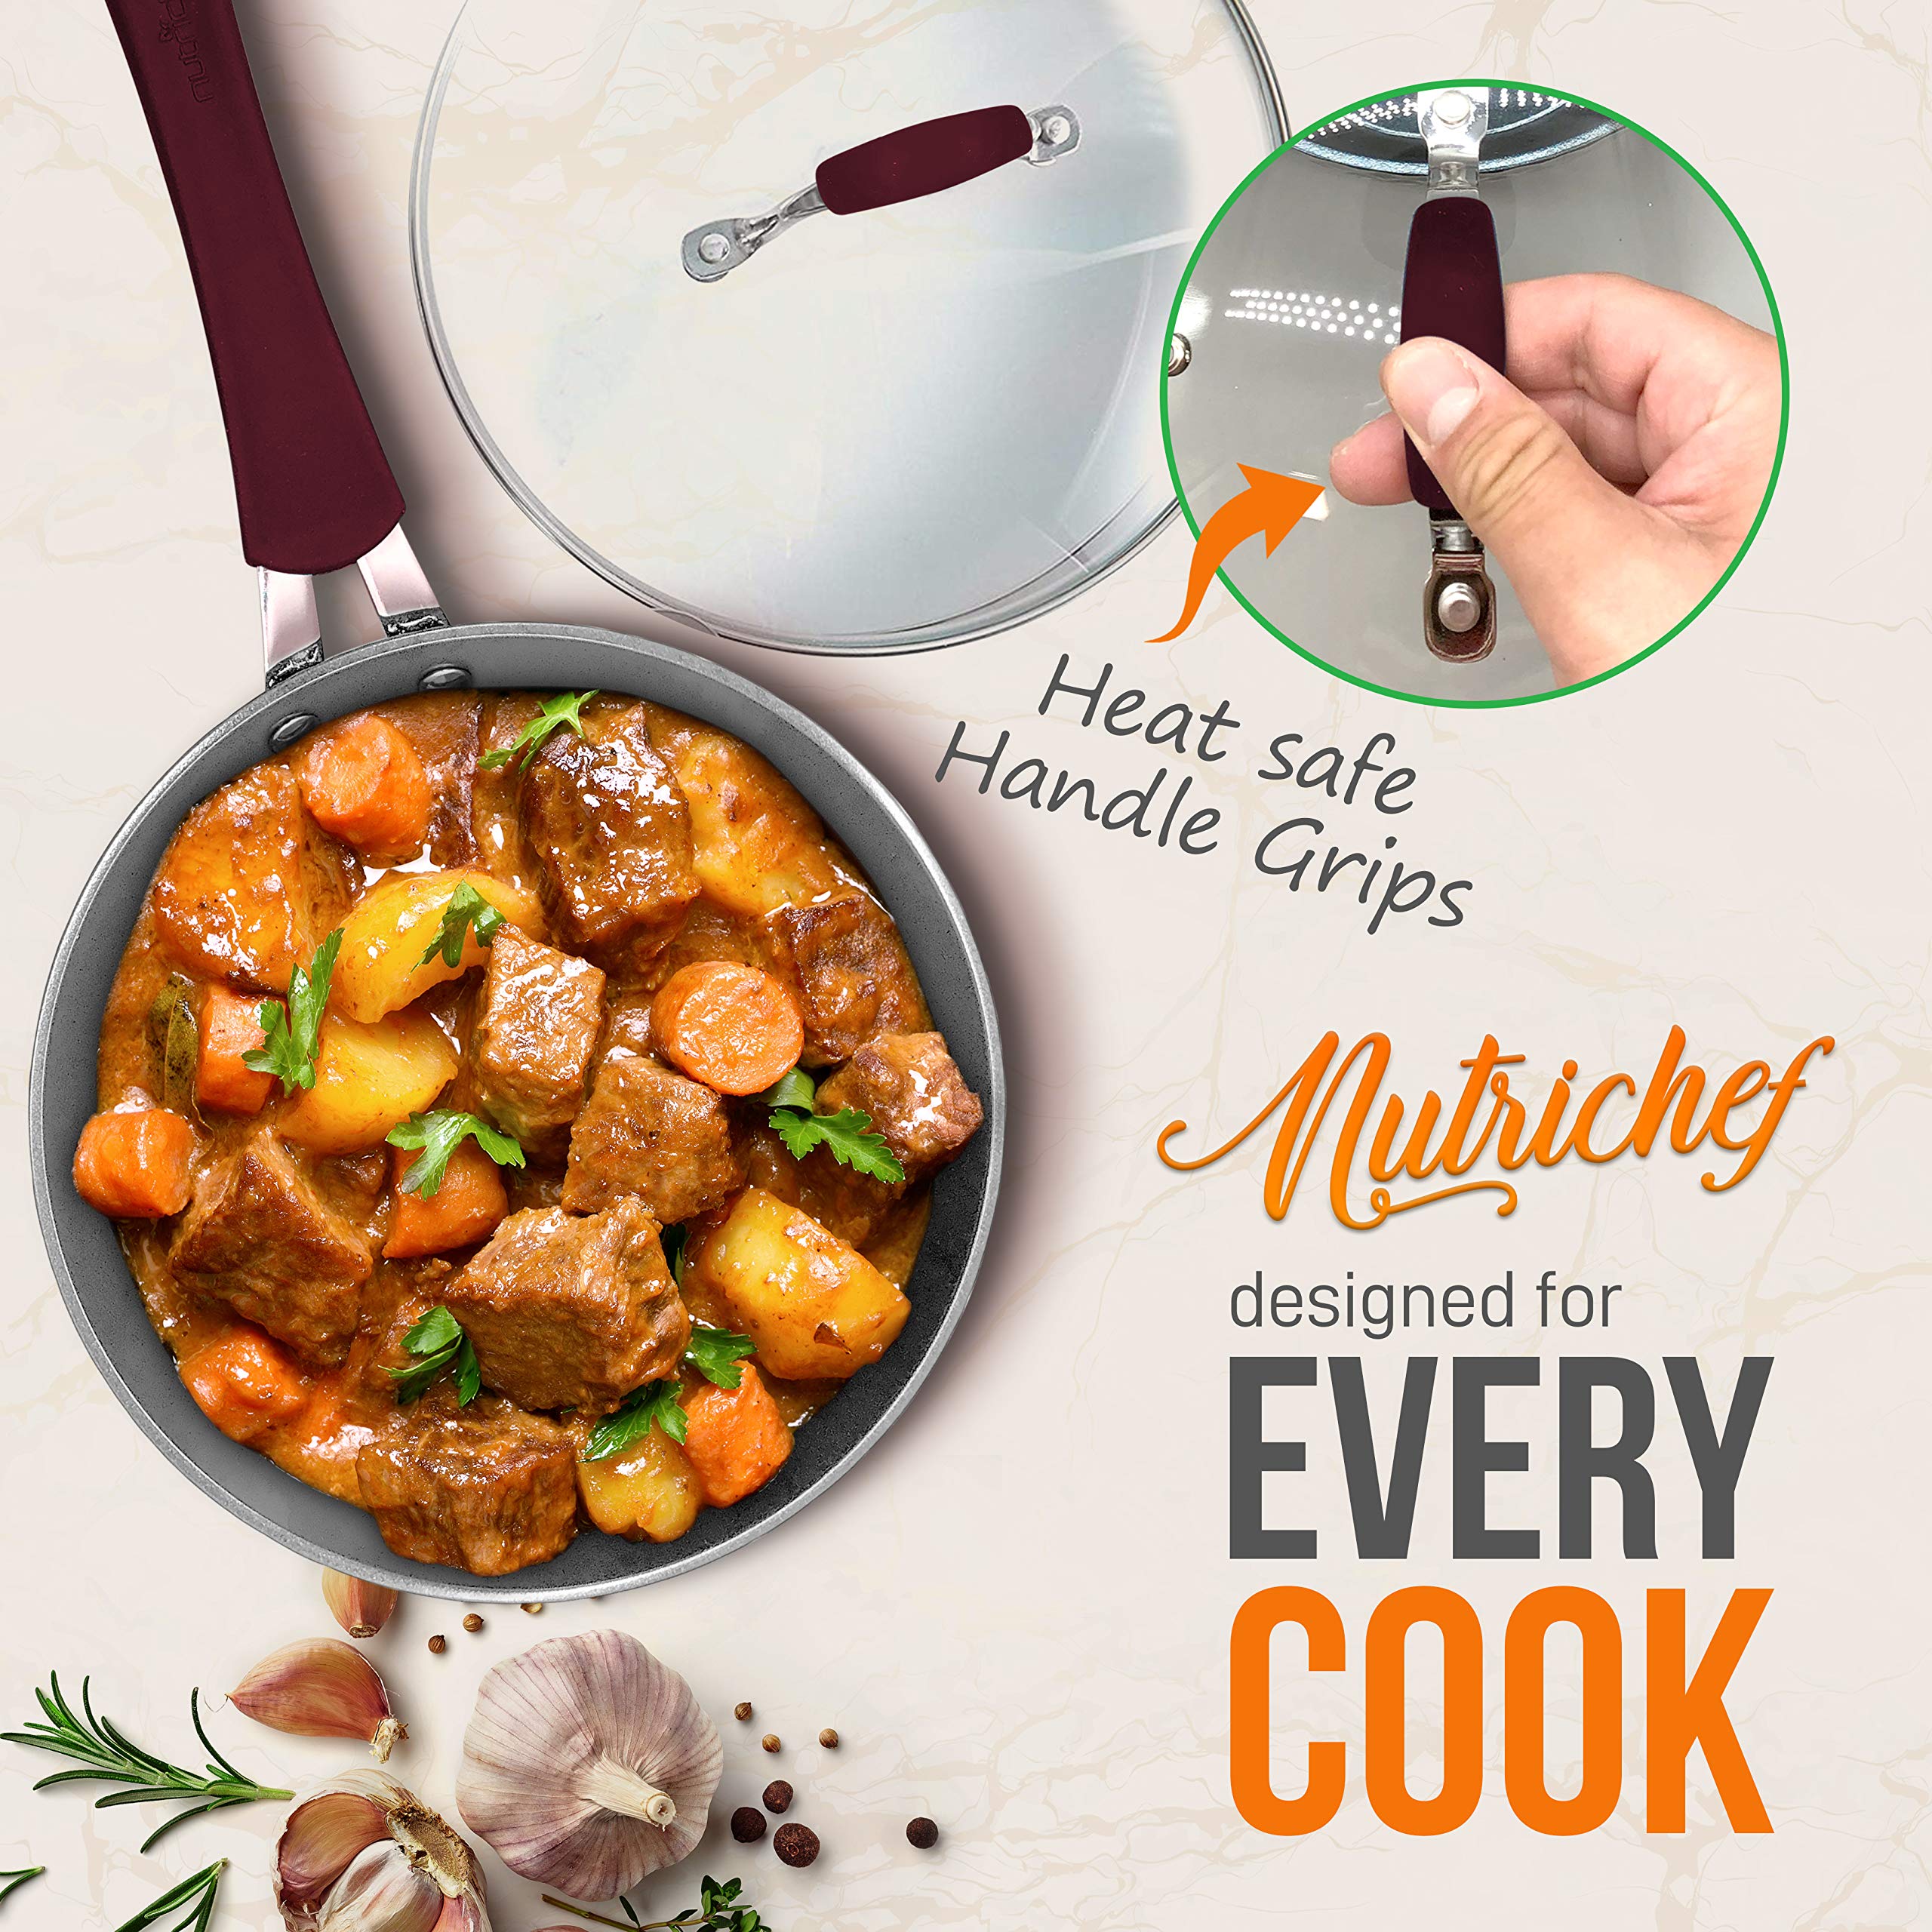 NutriChef Nonstick Cookware Excilon Home Kitchen Ware Pots & Pan Set with Saucepan Frying Pans, Cooking Pots, Lids, Utensil PTFE/PFOA/PFOS free, 11 Pcs, Purple Diamond, One size